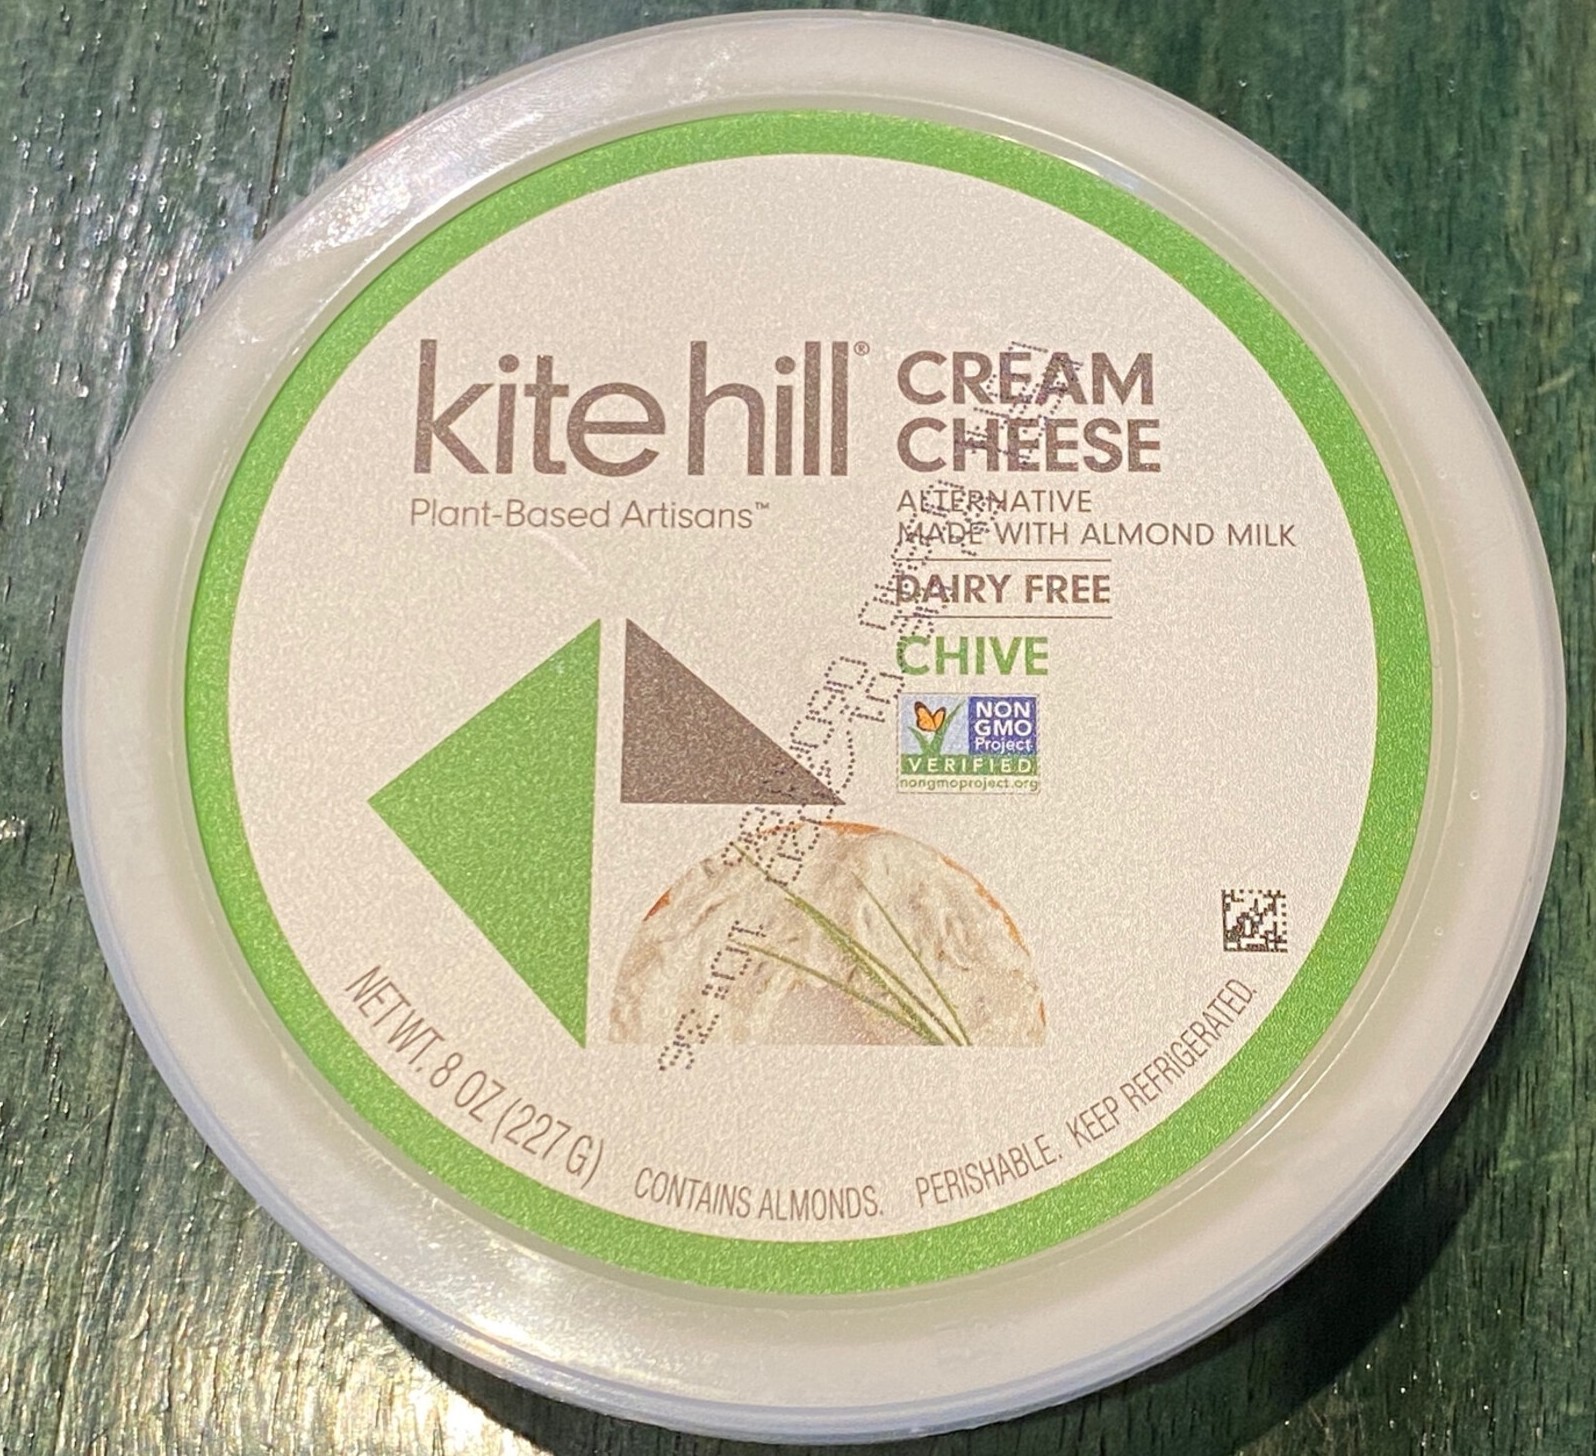 Kite Hill Chive Cream Cheese Tub